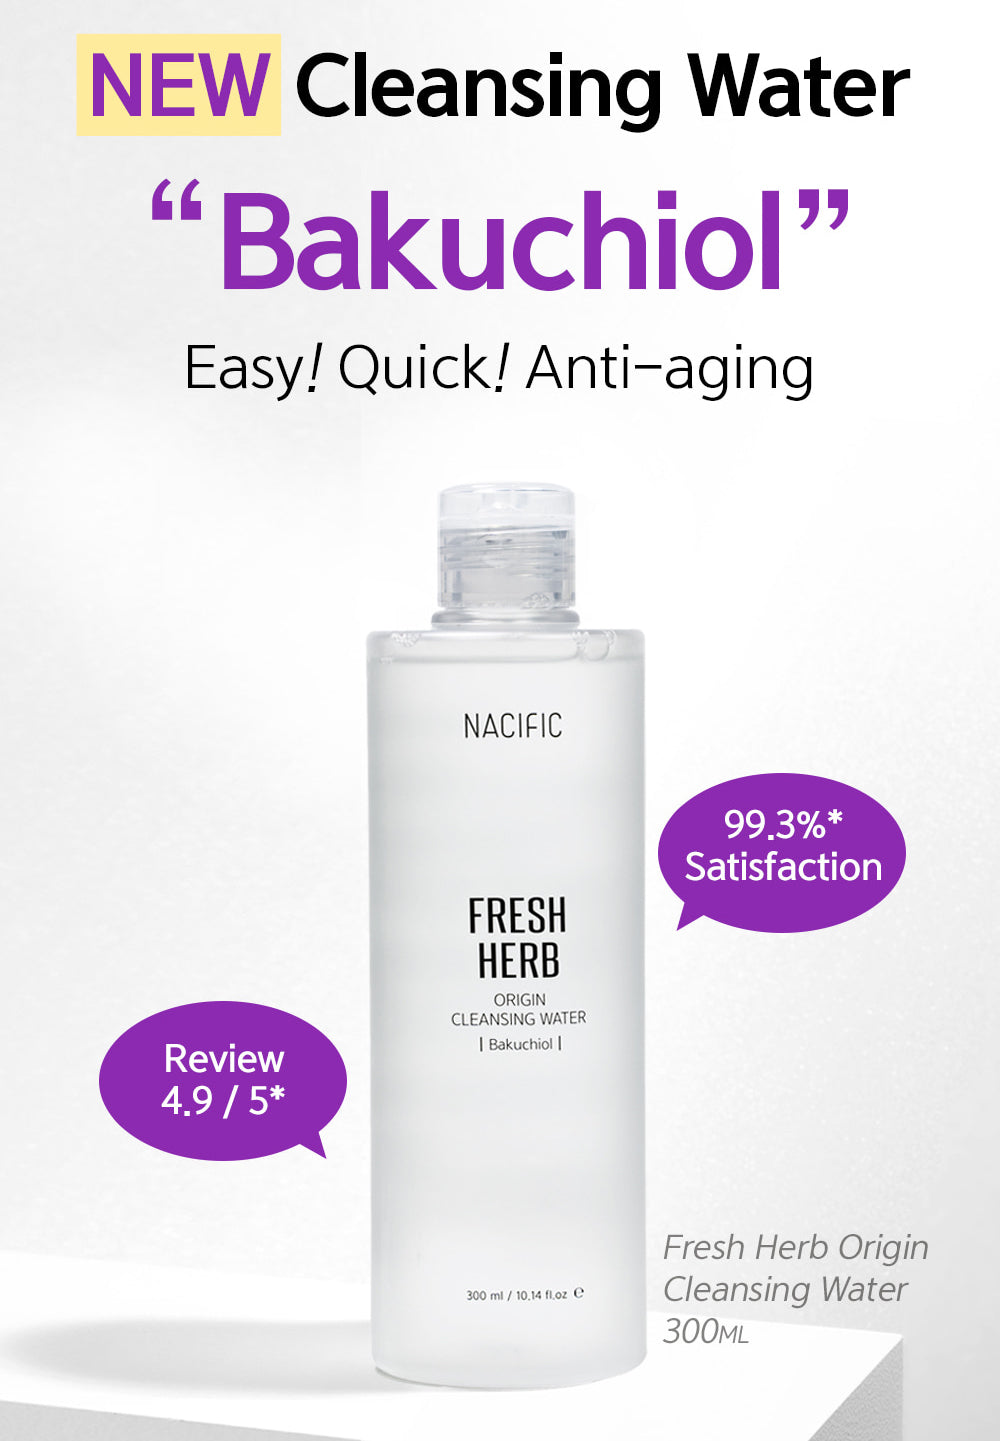 Fresh Herb Origin Cleansing Water Bakuchiol